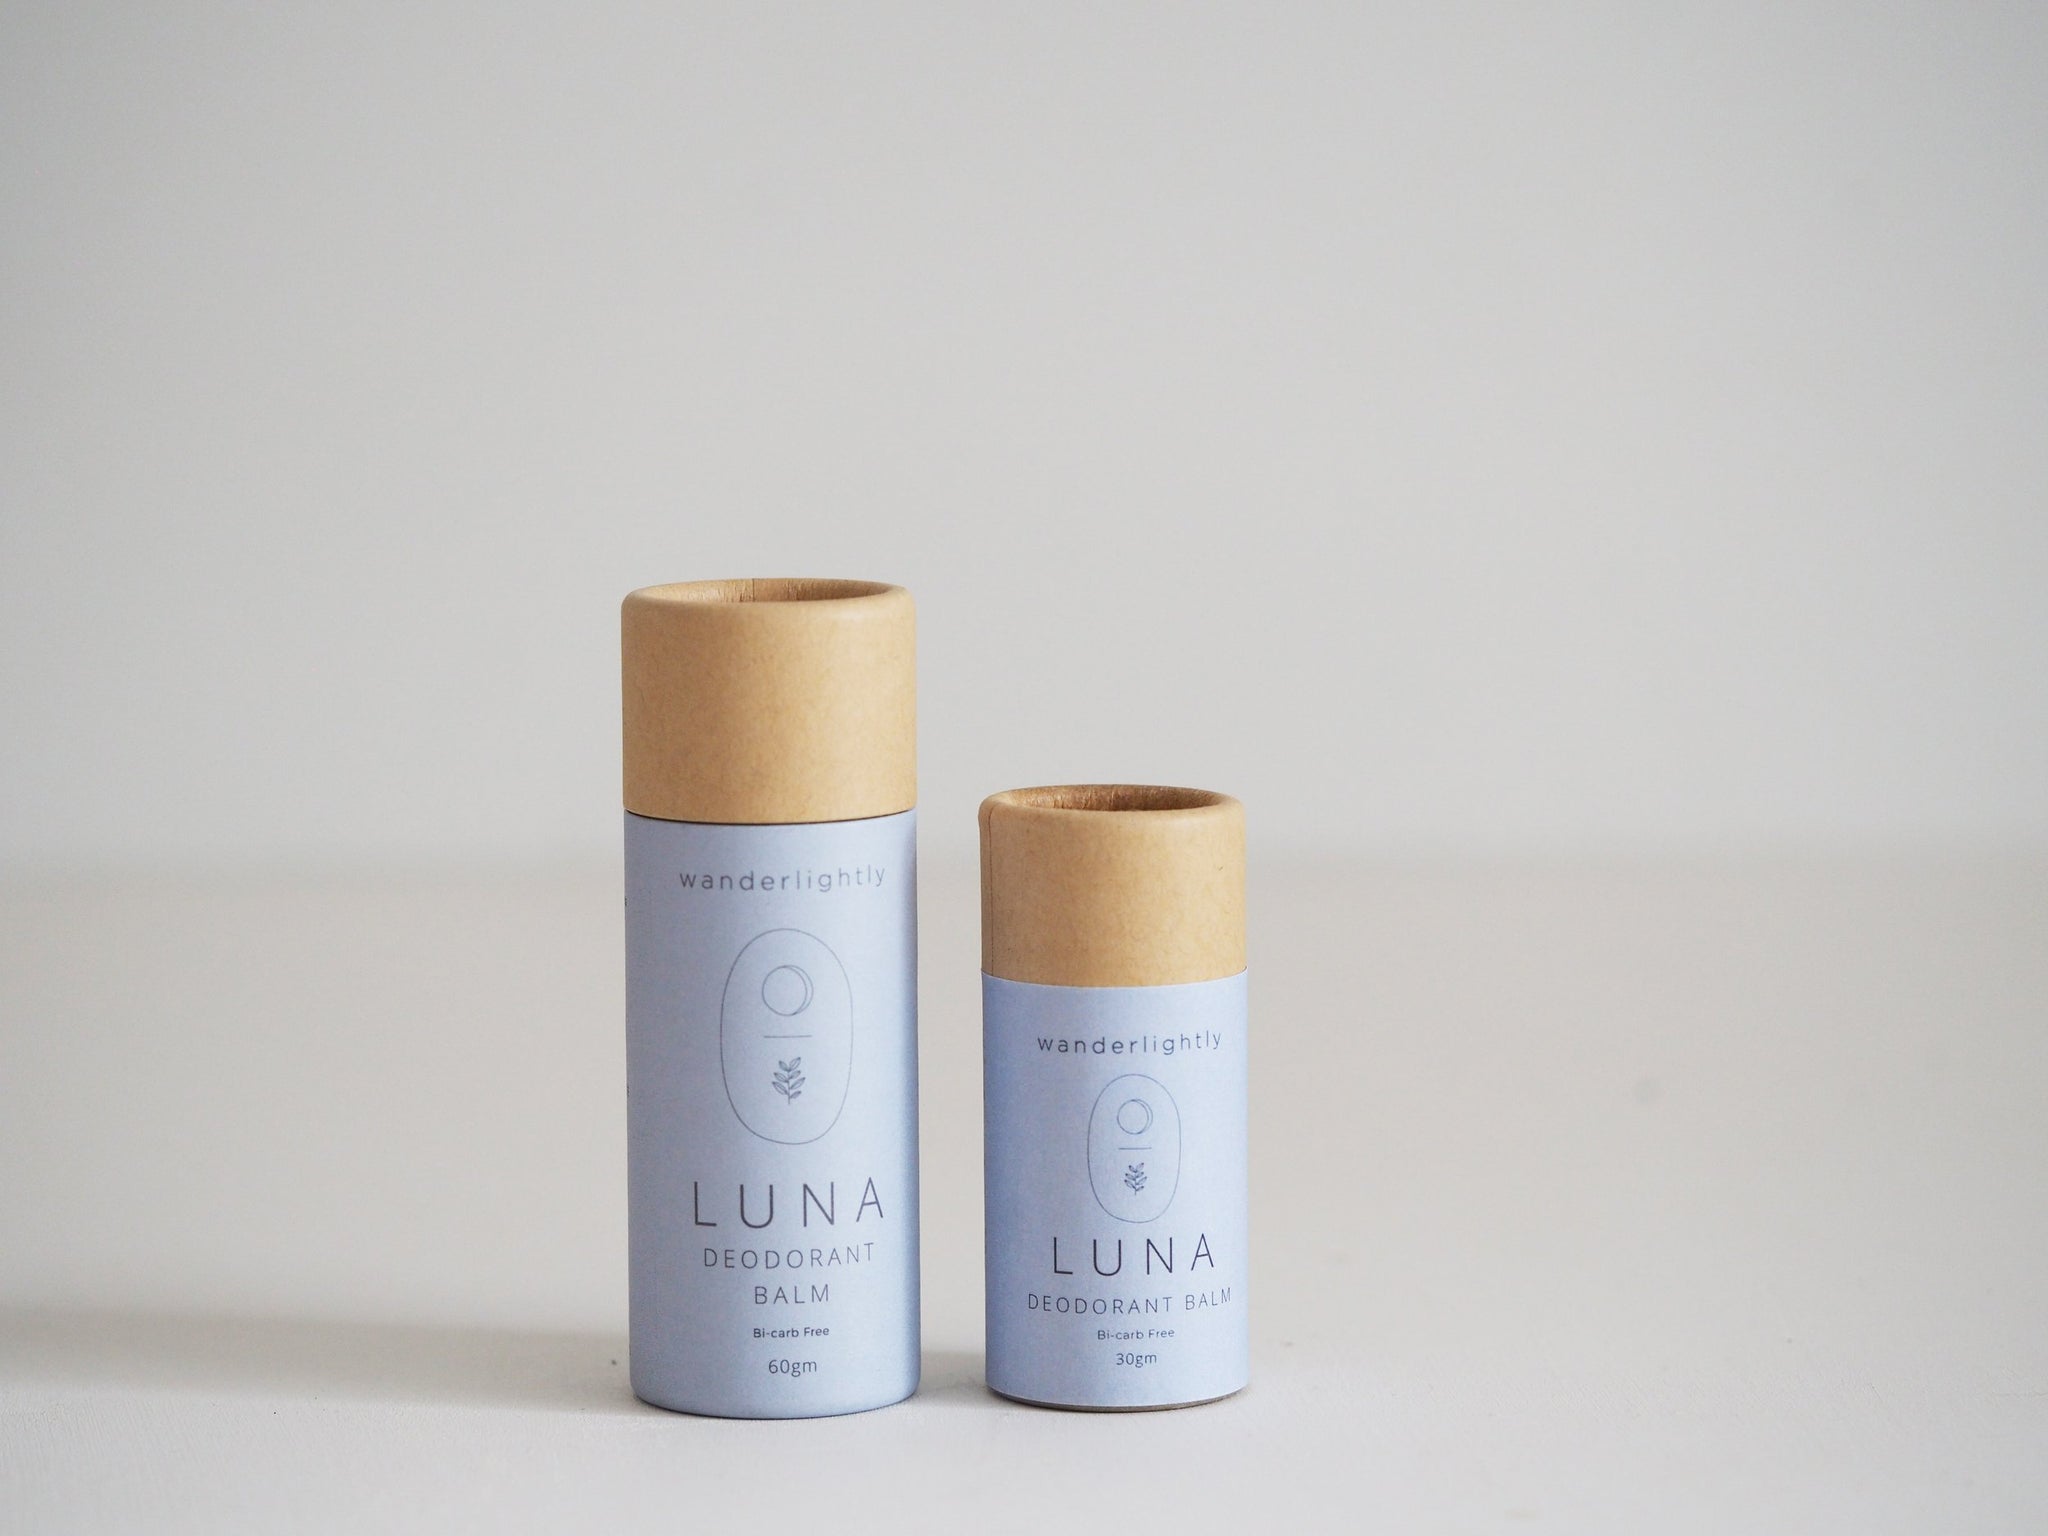 Luna deodorant balm - bicarb free